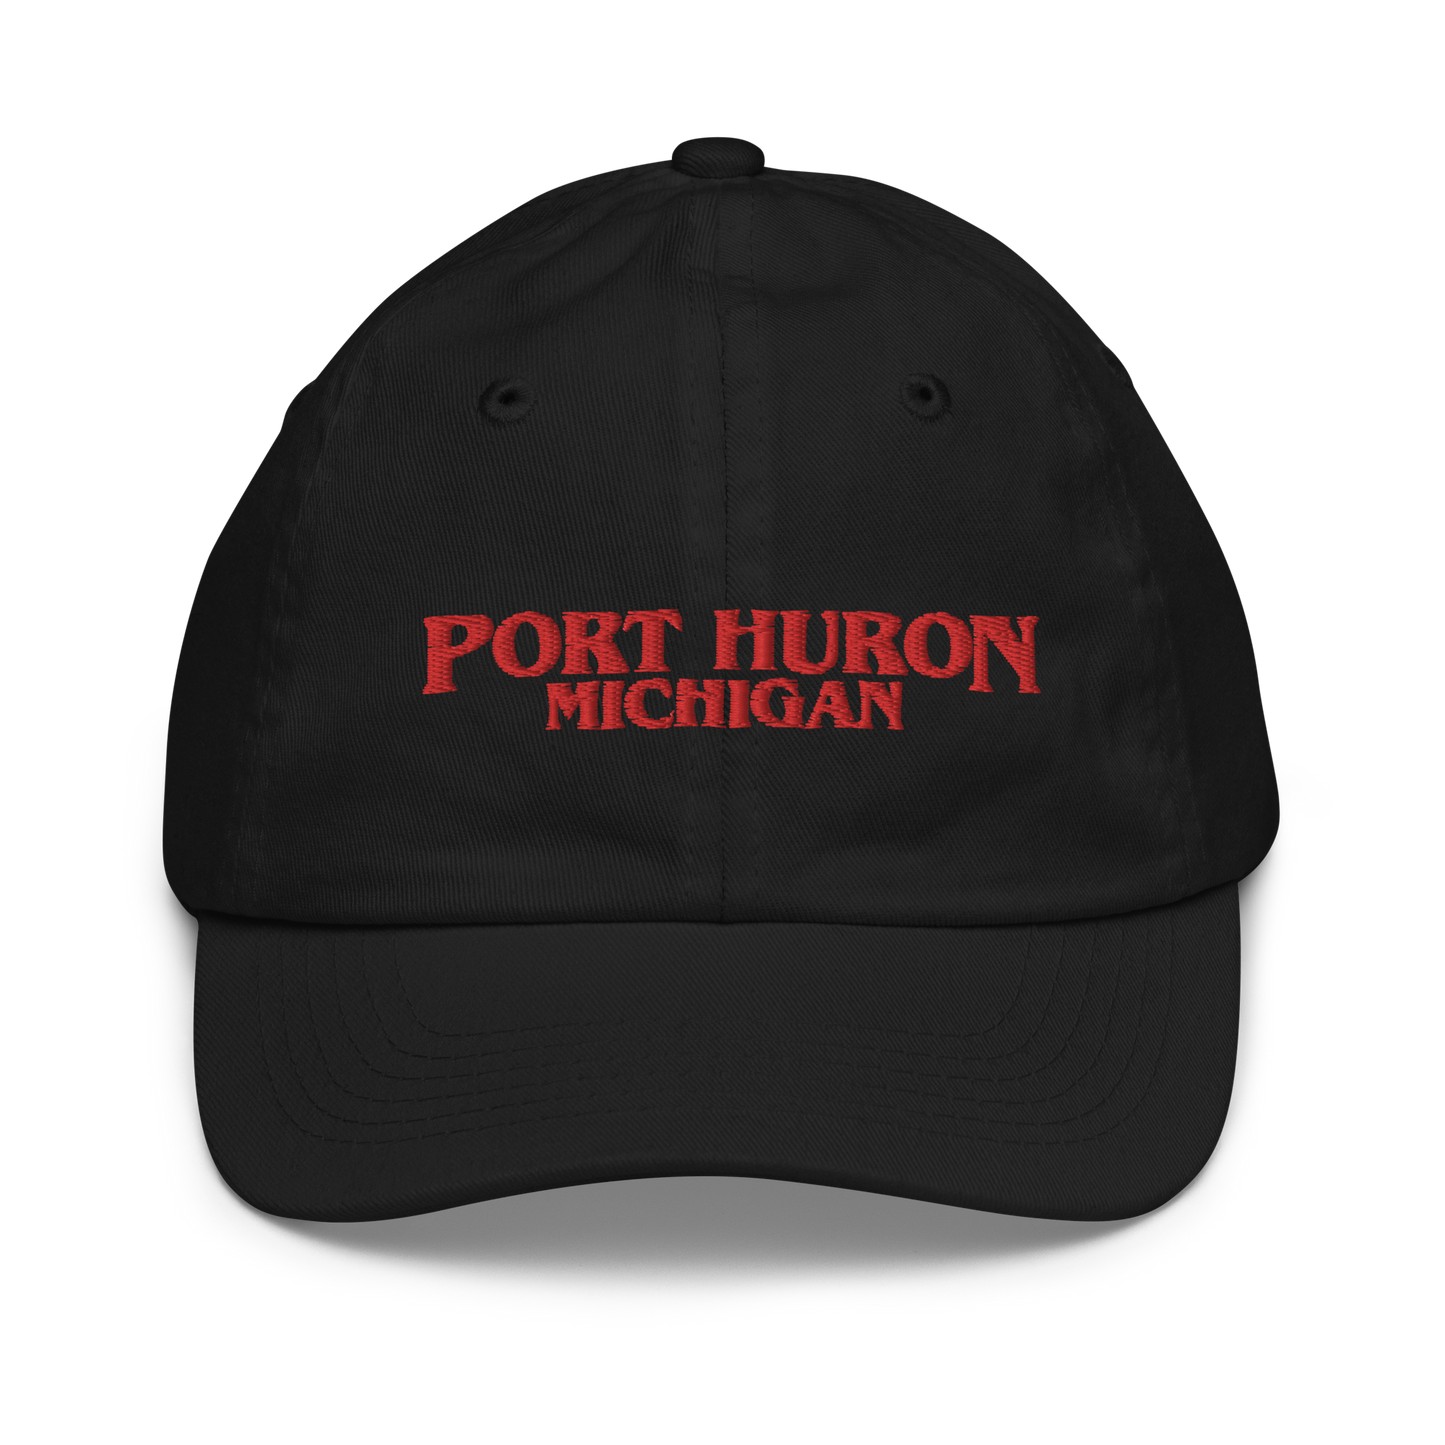 'Port Huron Michigan' Youth Baseball Cap (1980s Drama Parody)